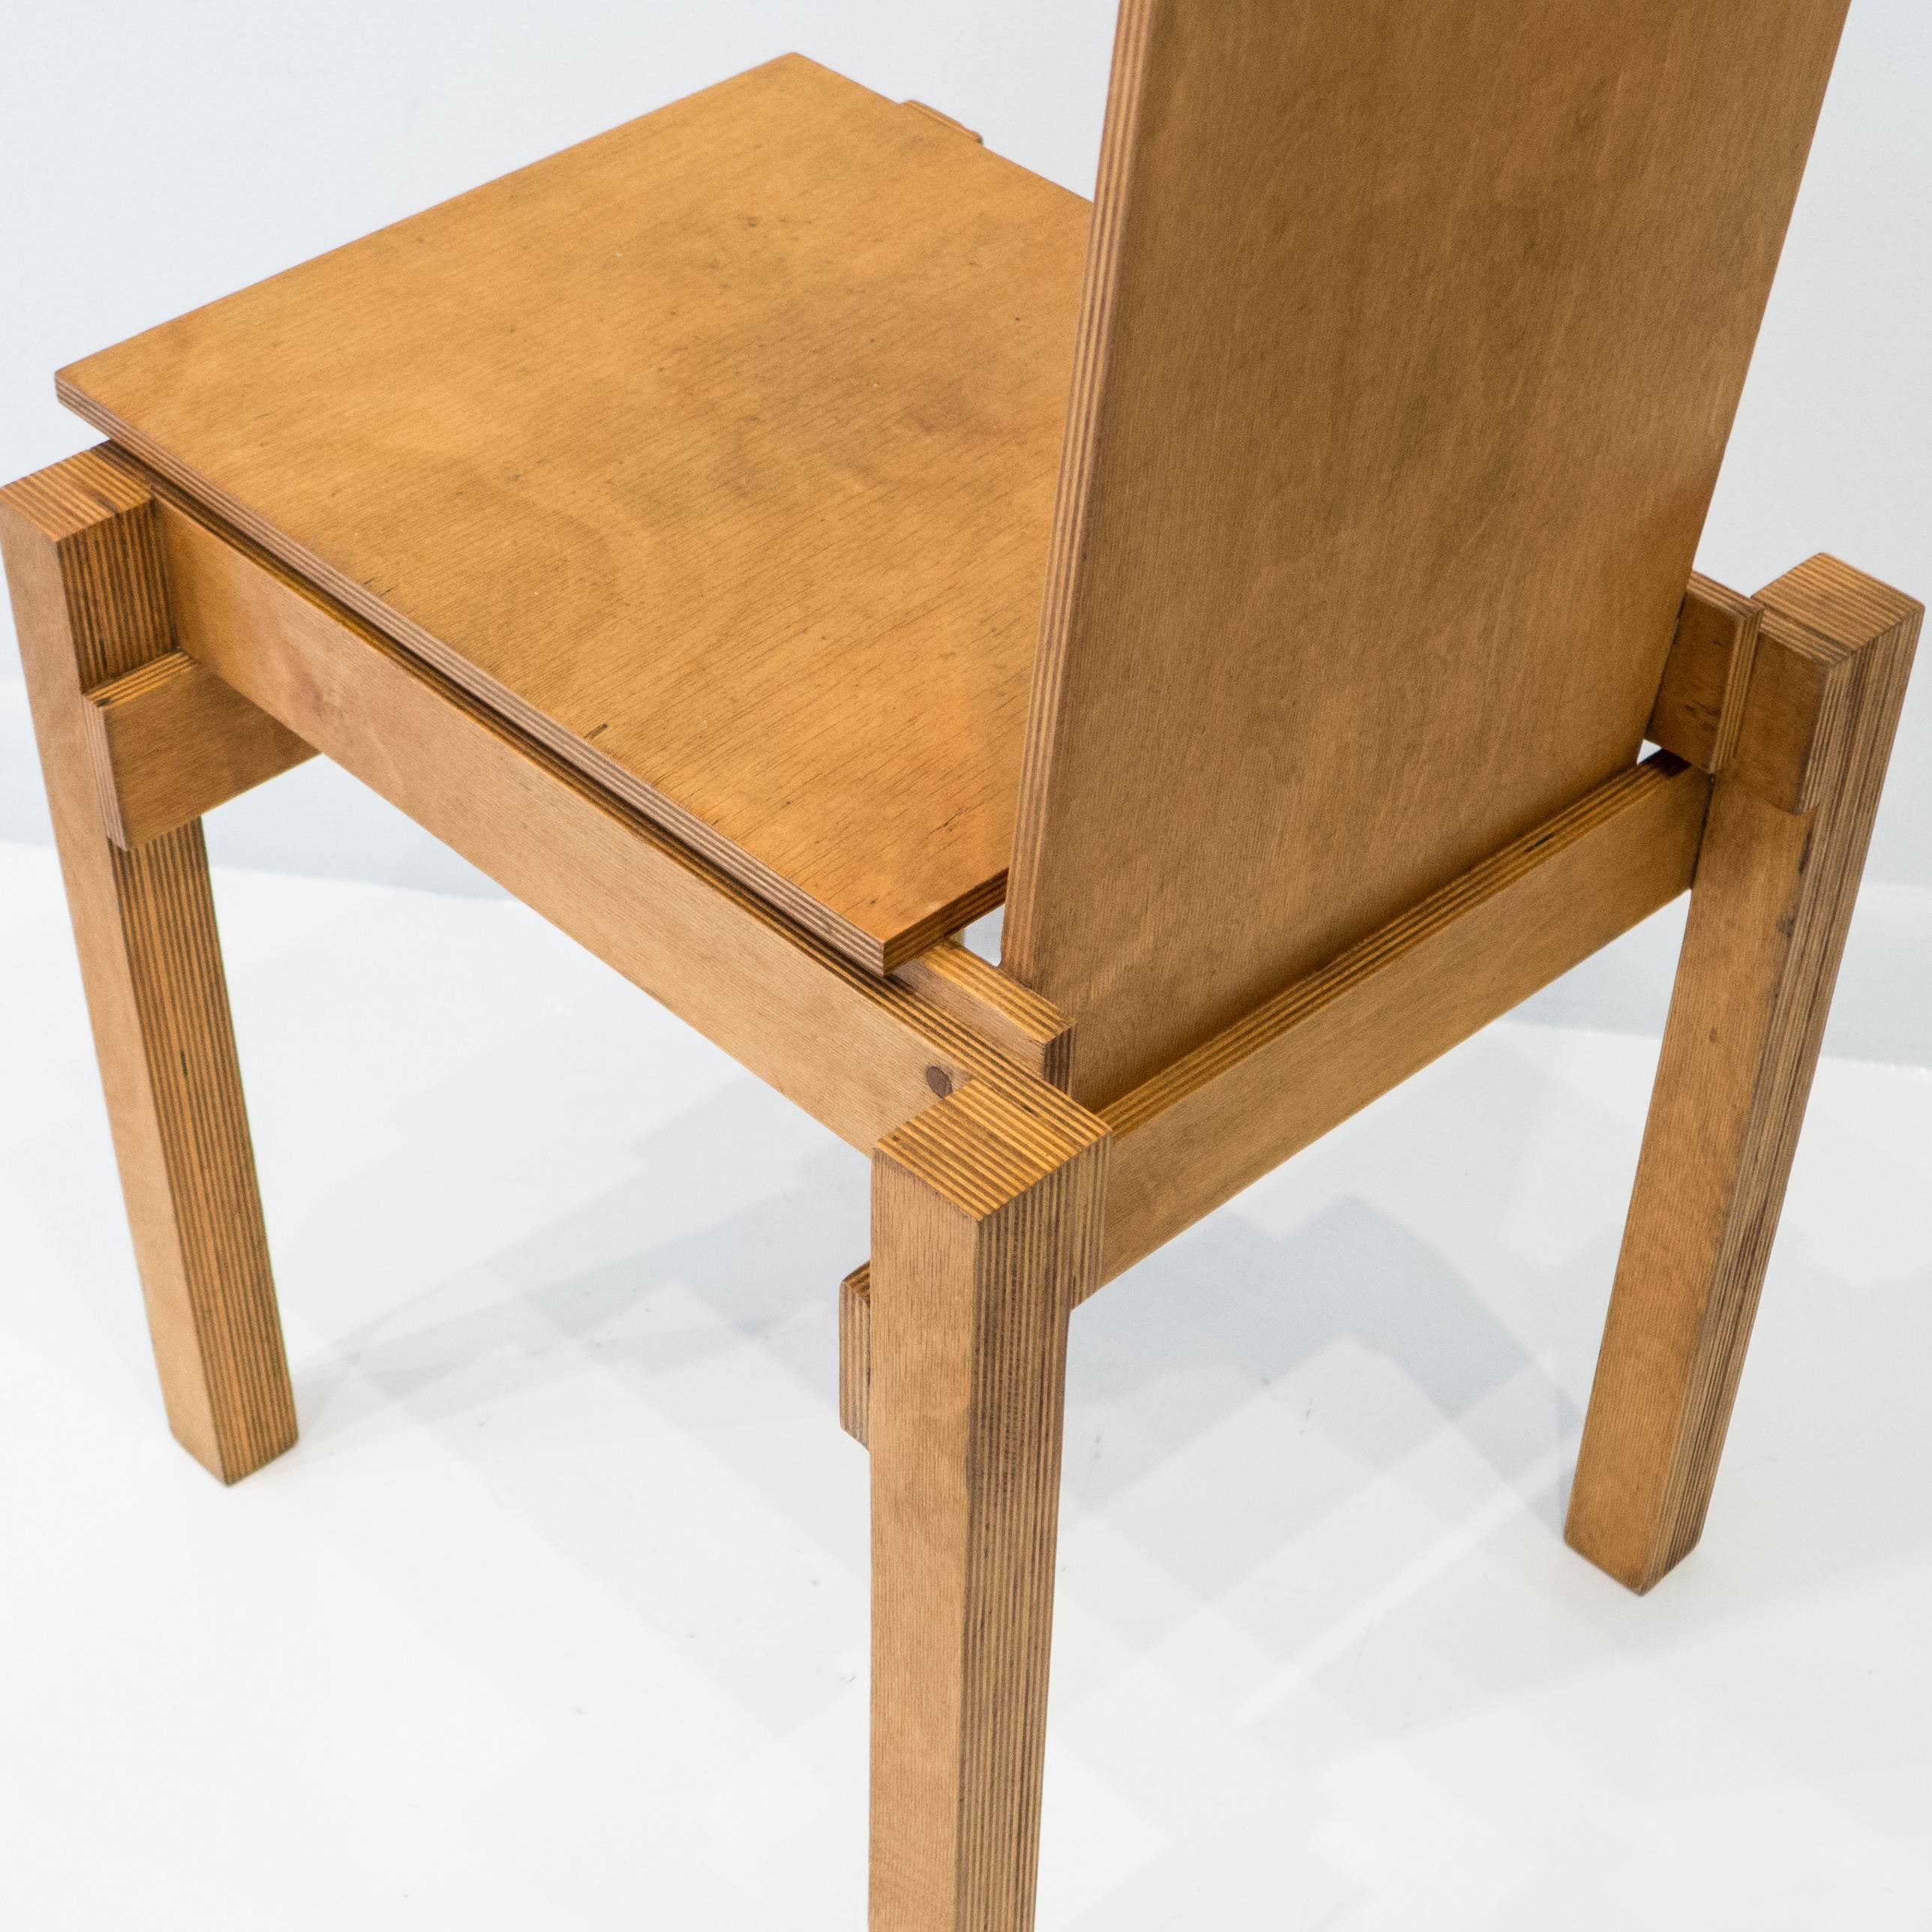 American Constructivist Chair in Birch Plywood